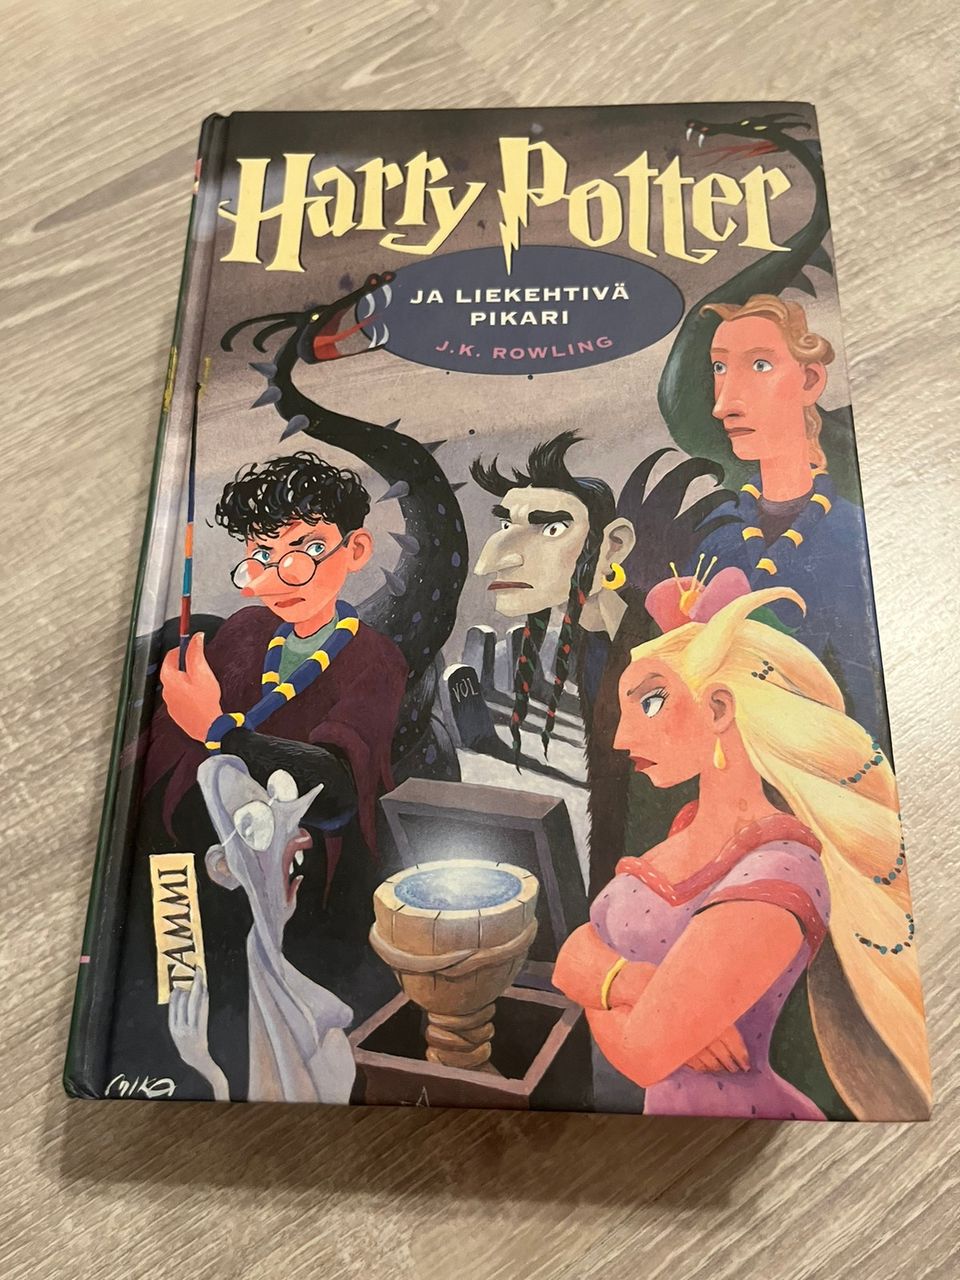 J. K. Rowling - Harry Potter ja Liekehtivä pikari